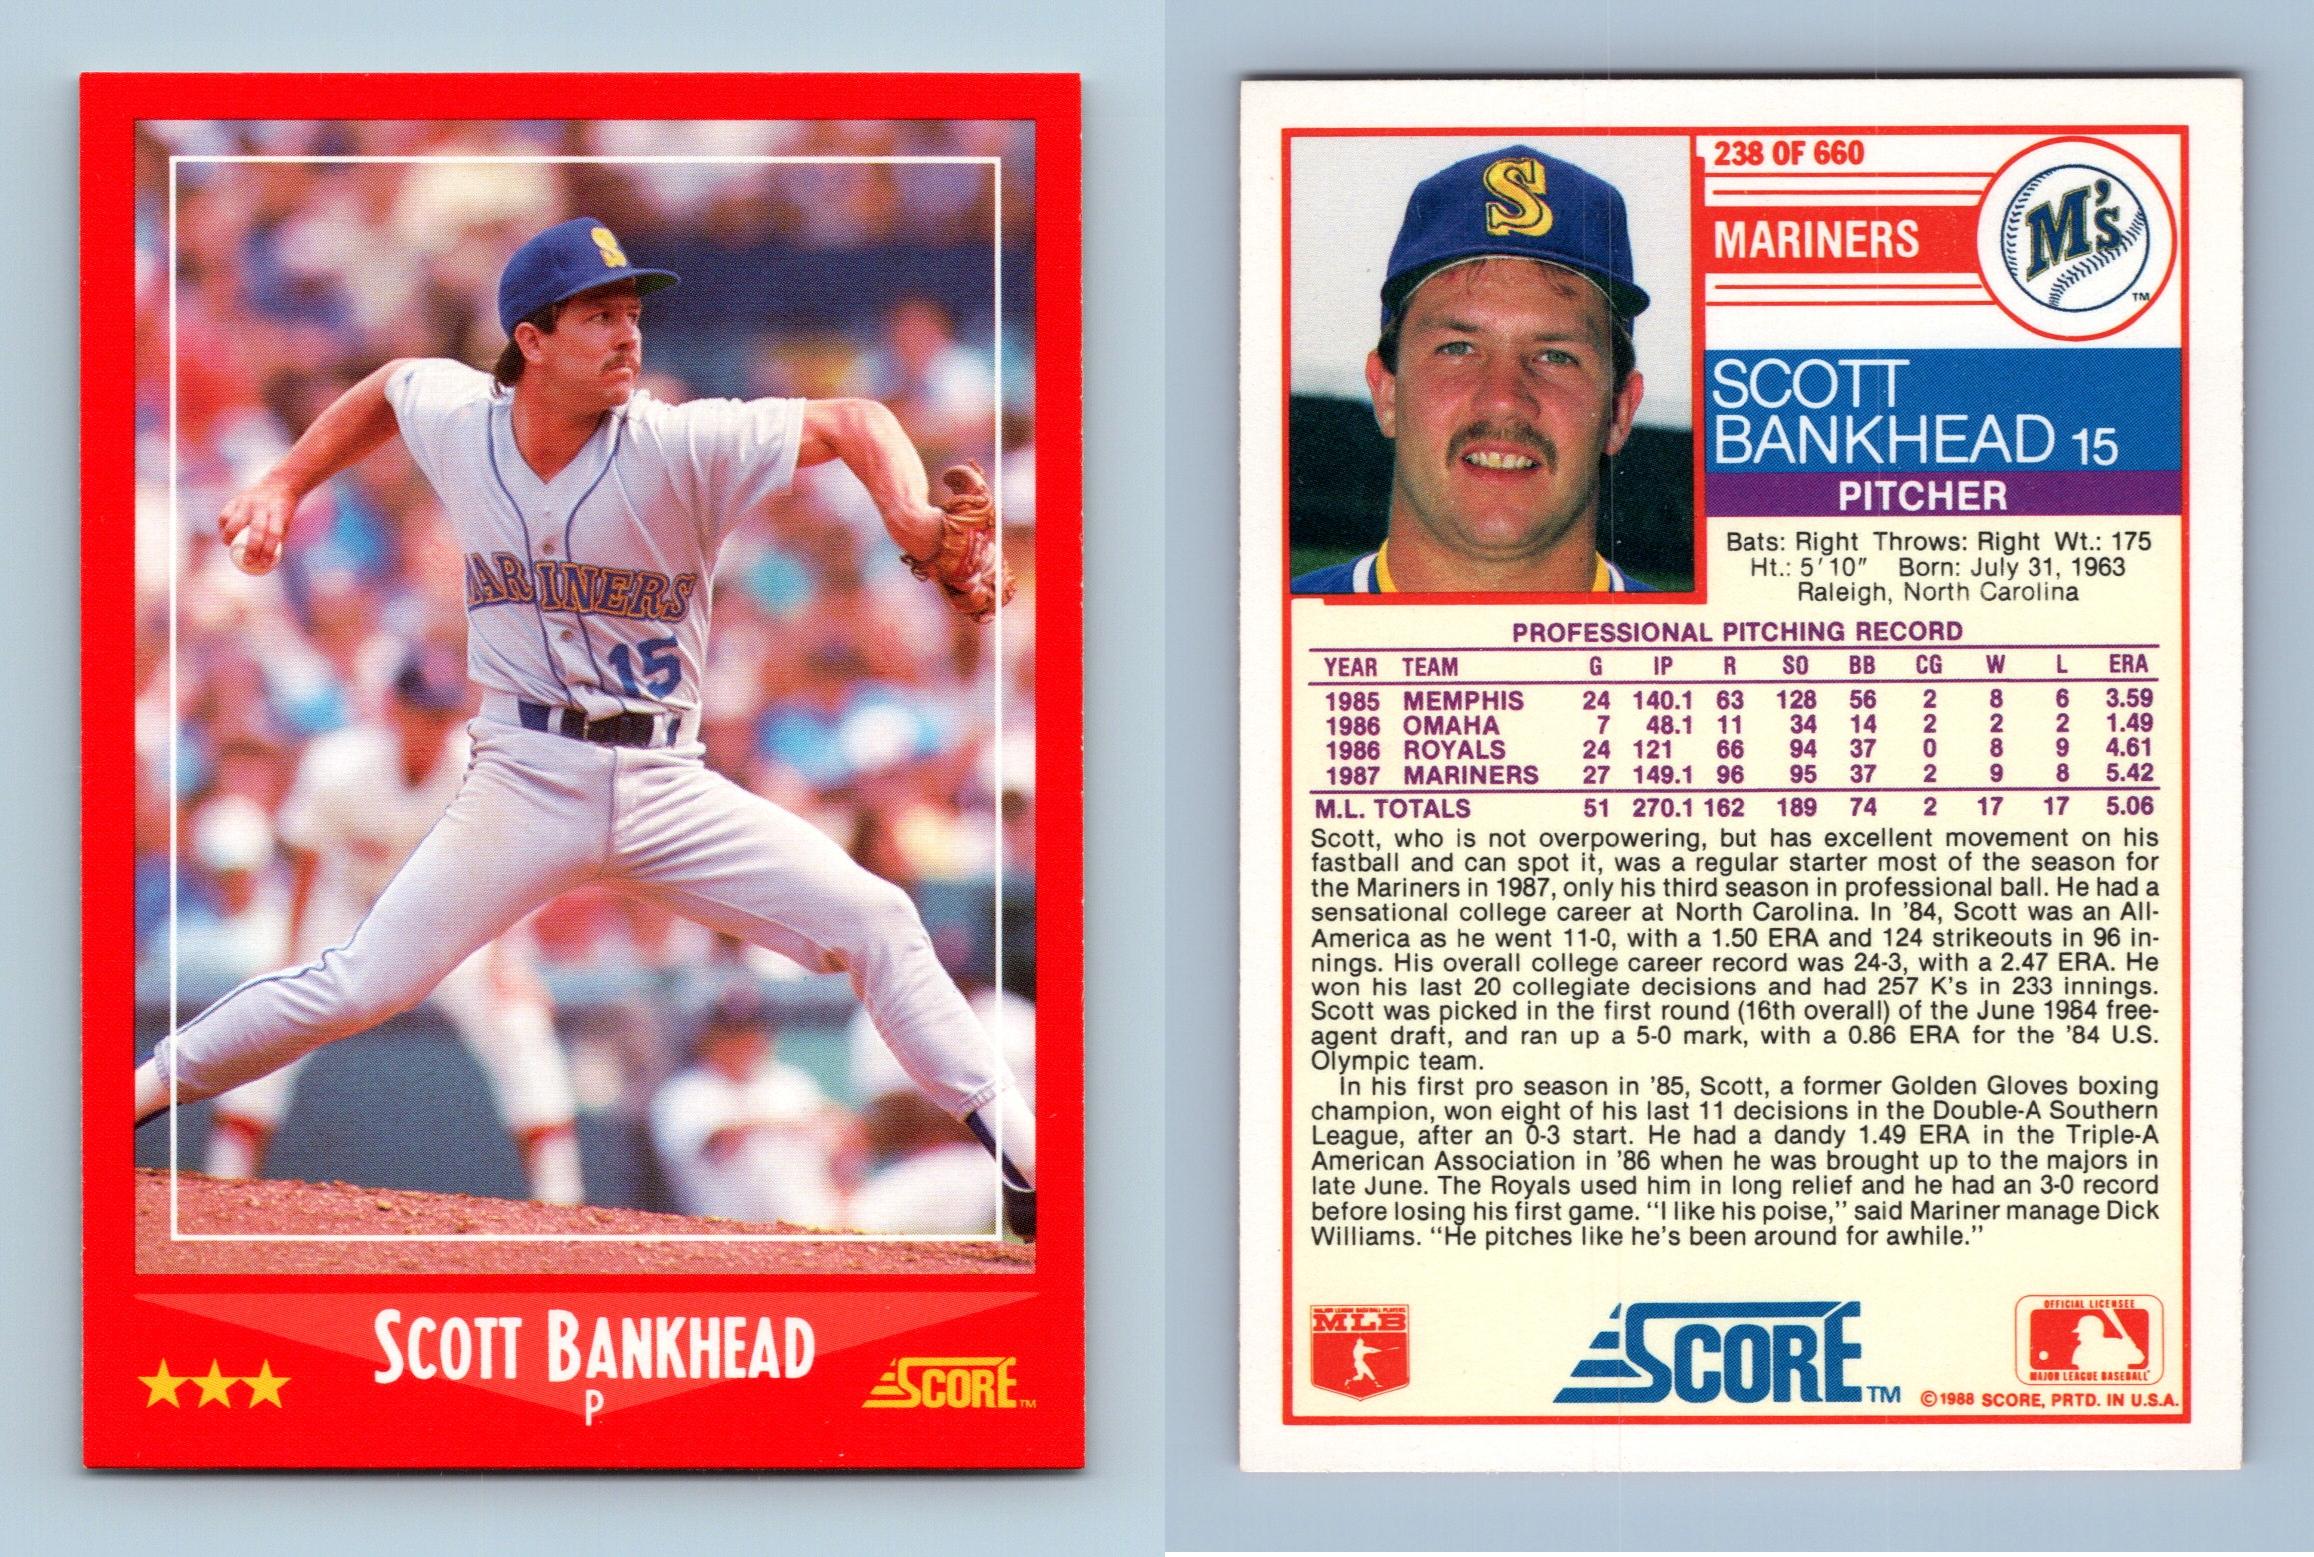 Ron Guidry - Yankees #342 Score 1989 Baseball Trading Card